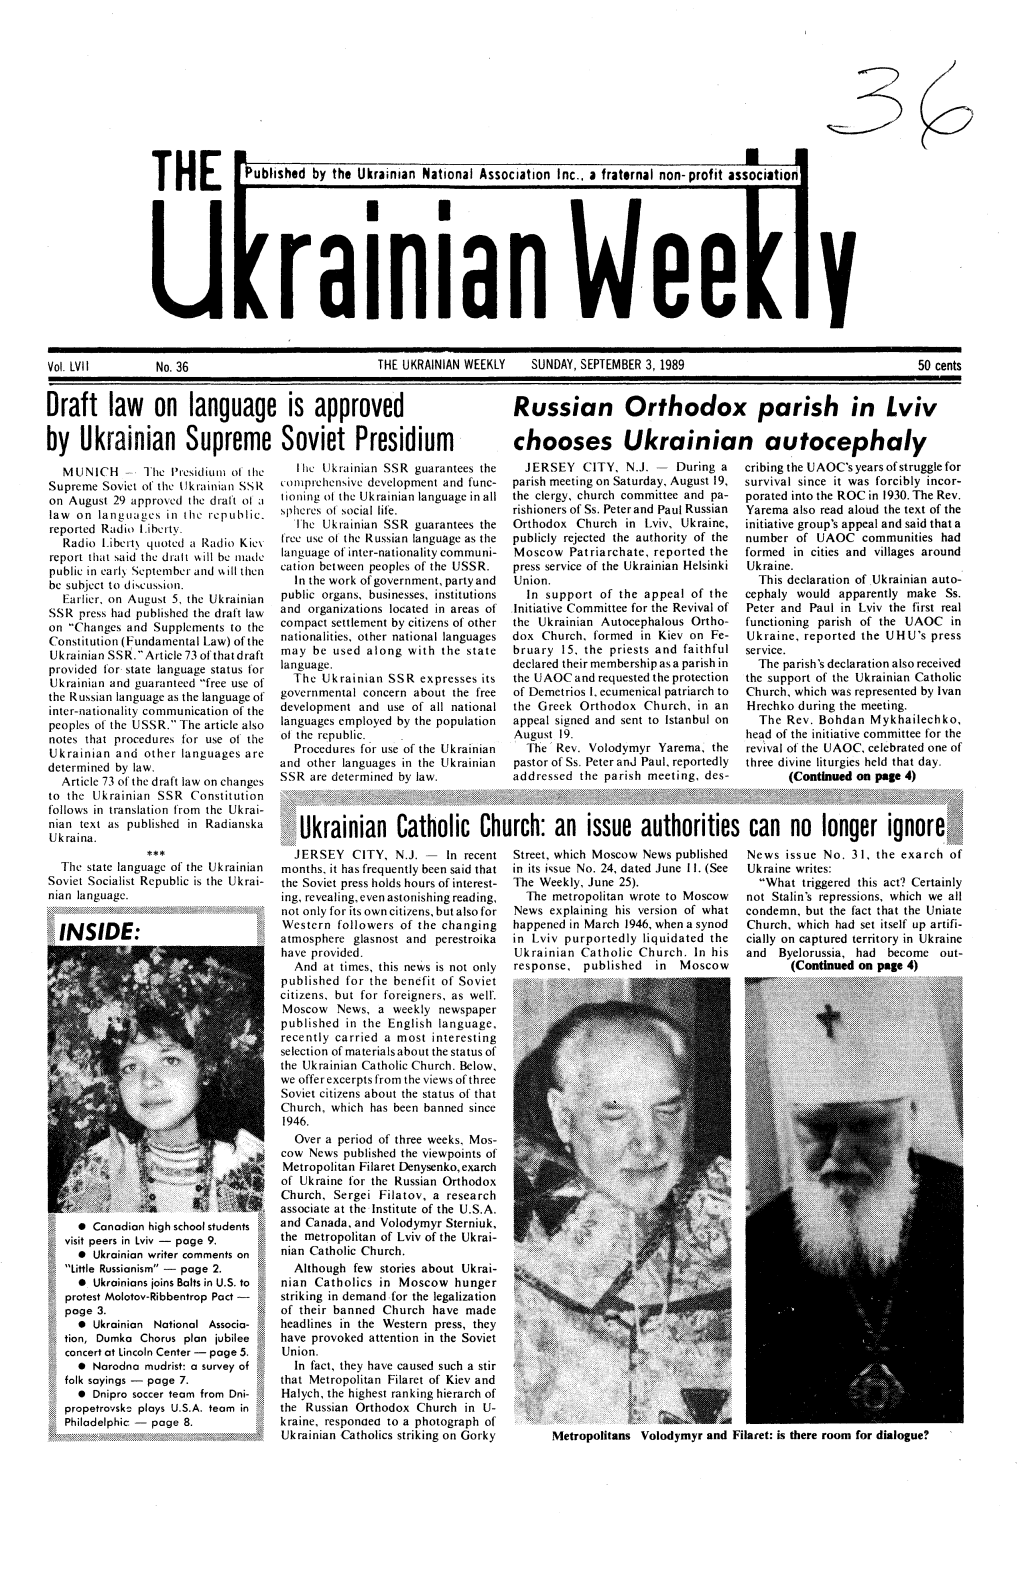 The Ukrainian Weekly 1989, No.36